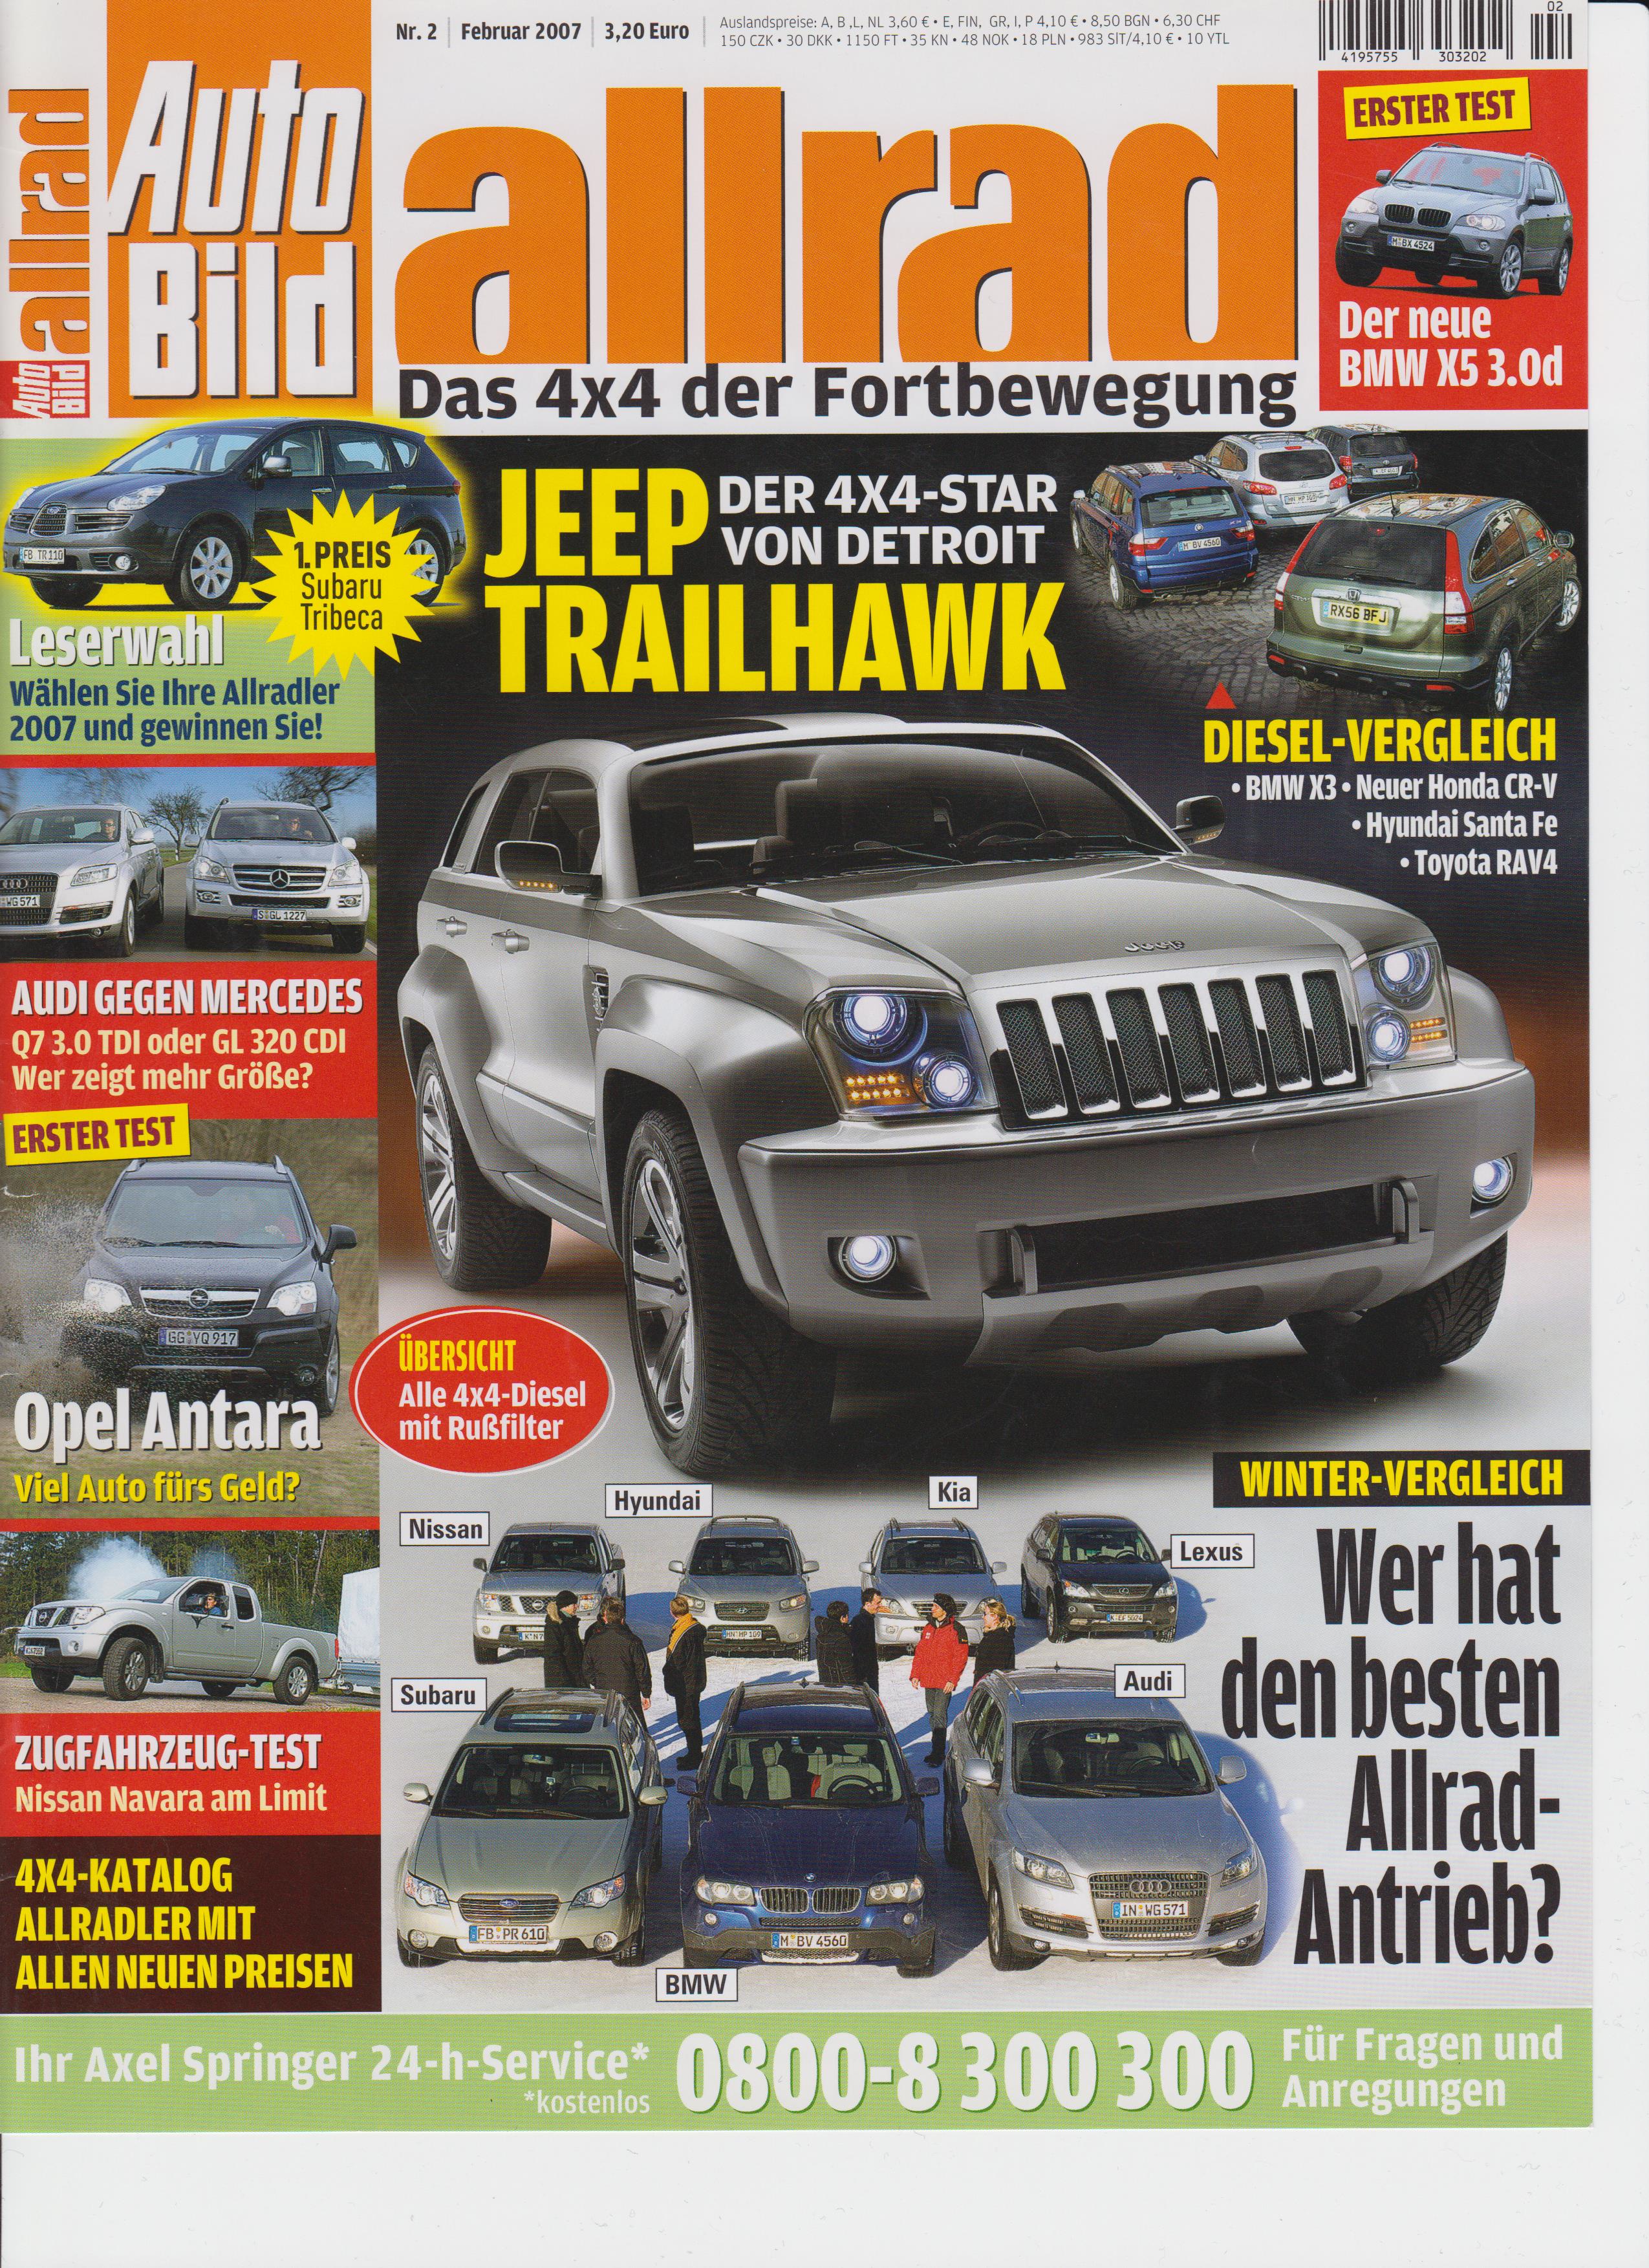 Trade magazine AutoBildAllrad 02 2007